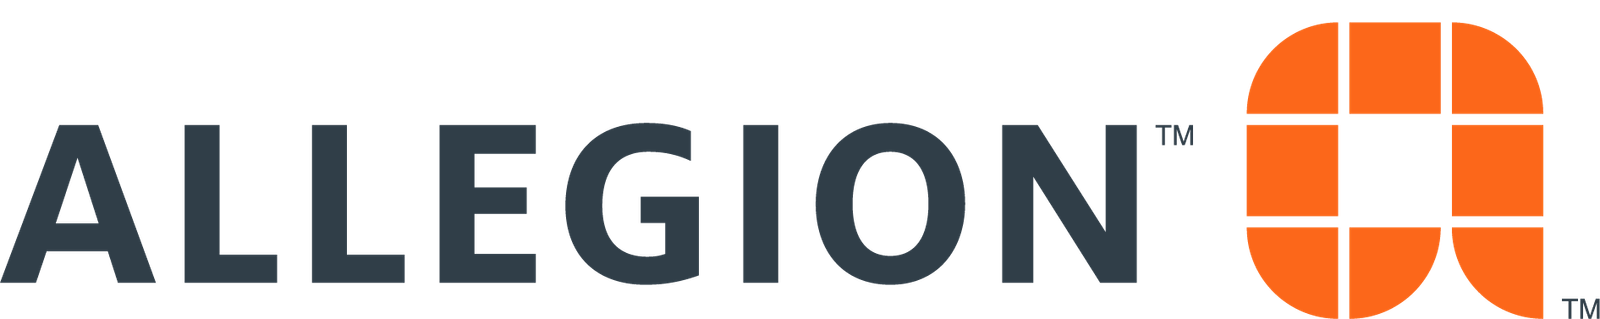 Allegion Horizontal Logo